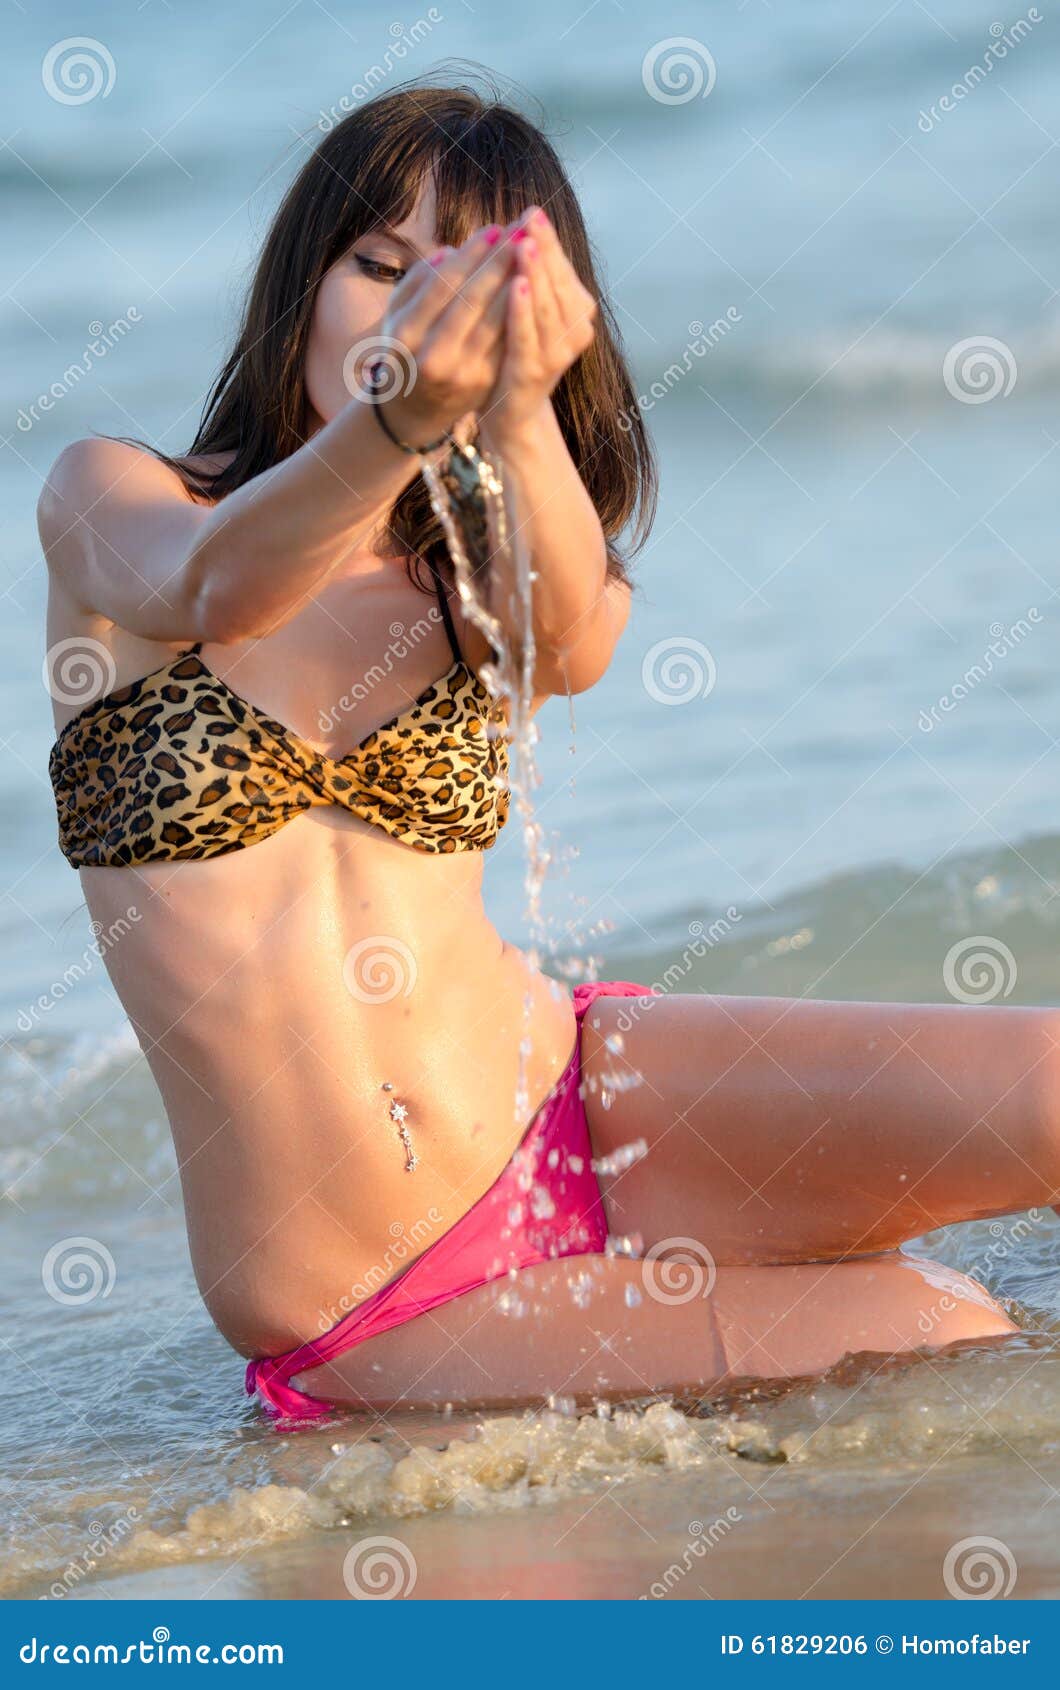 amateur bikini model portfolio sexy photo